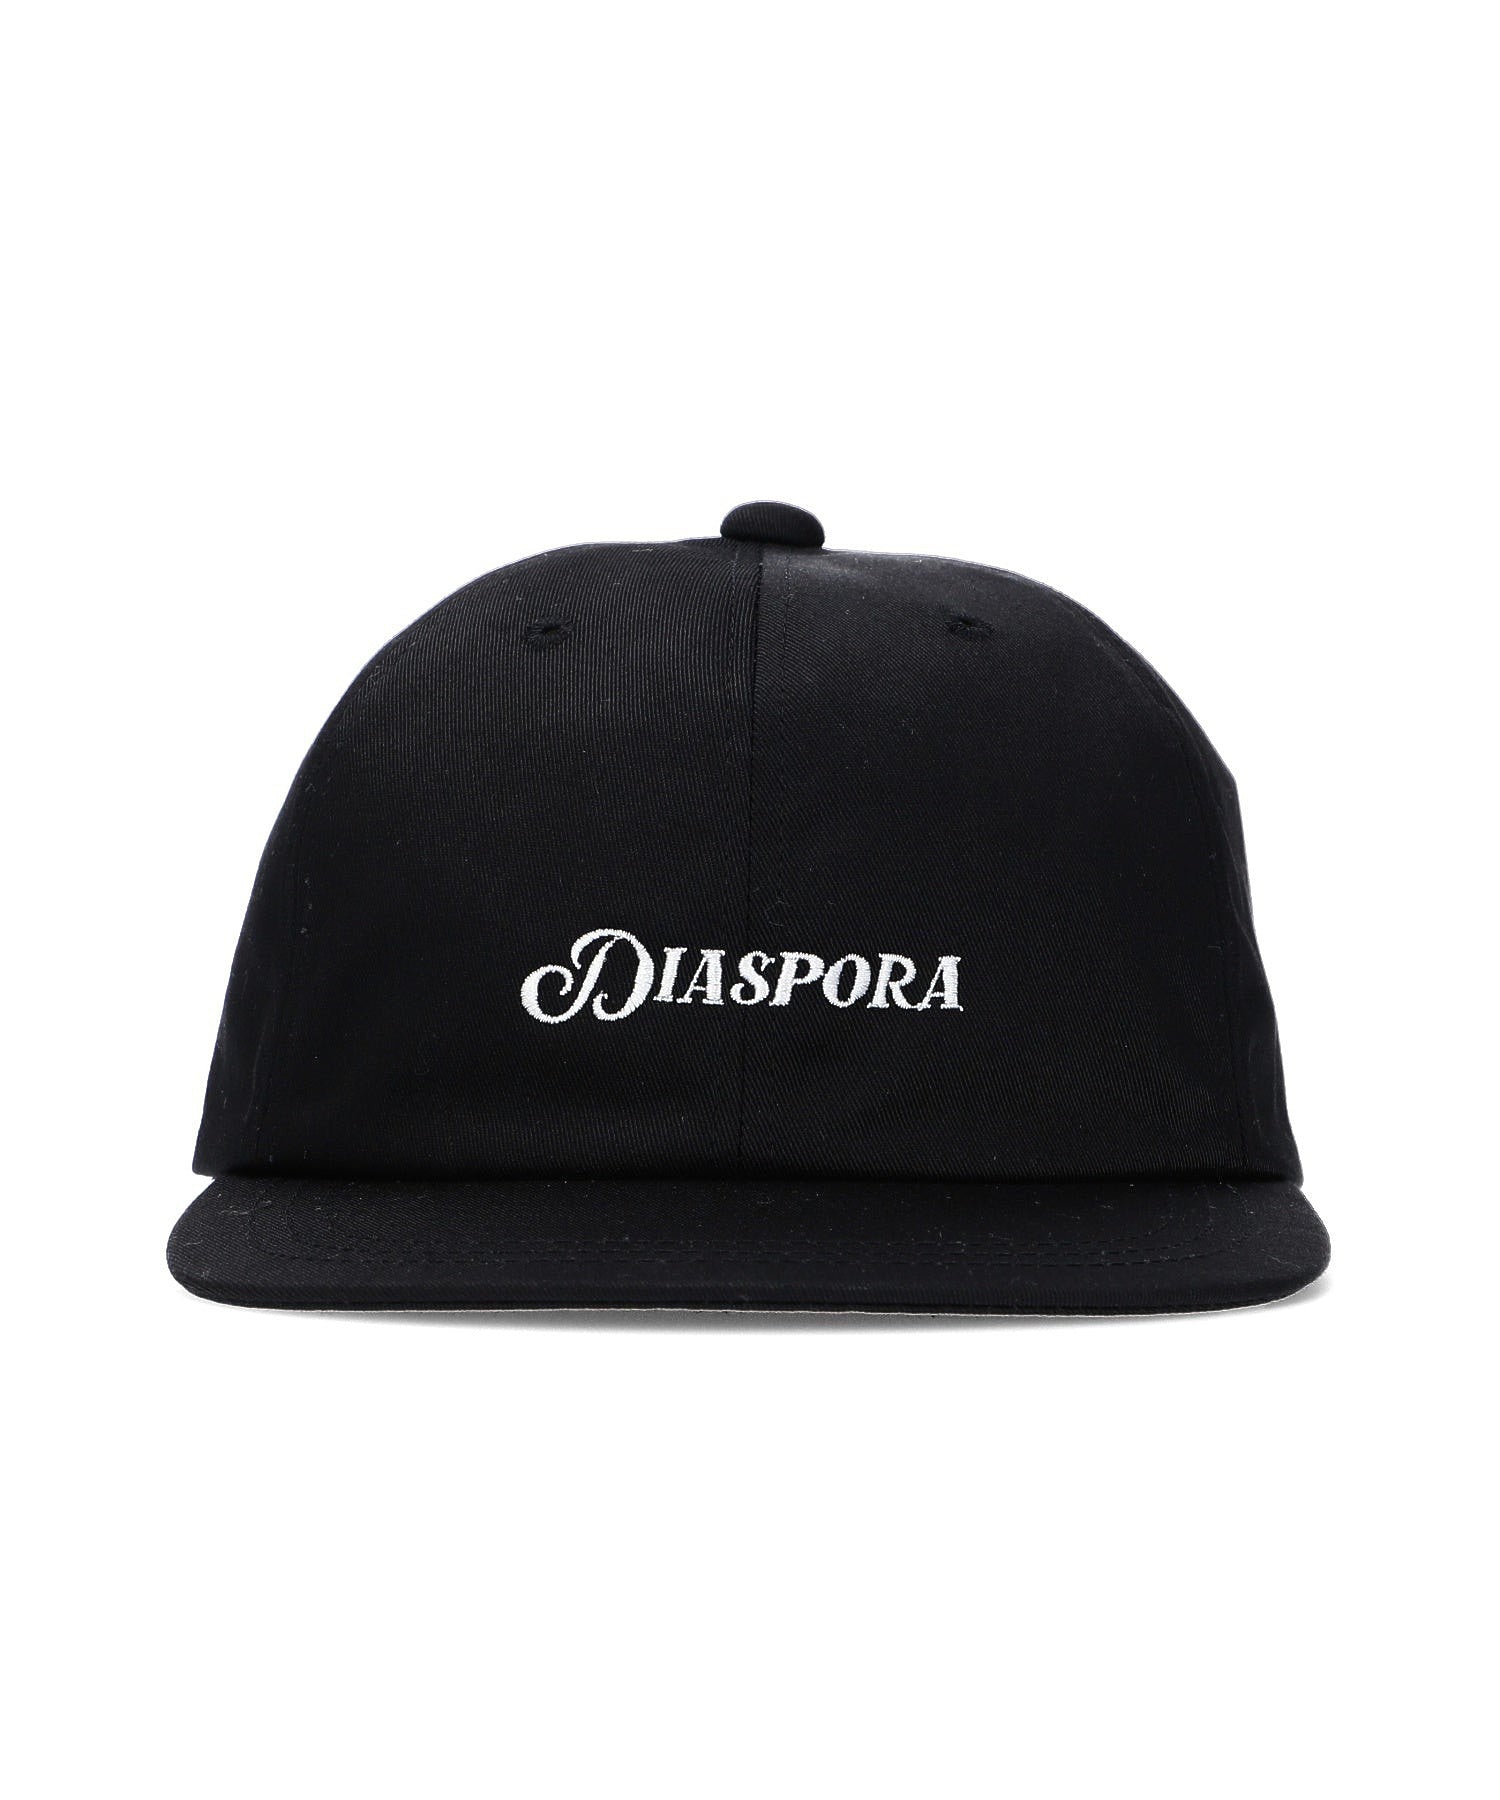 Diaspora Skateboards/ディアスポラスケートボーズ/CASTANEA 6 PANEL CAP/HW03